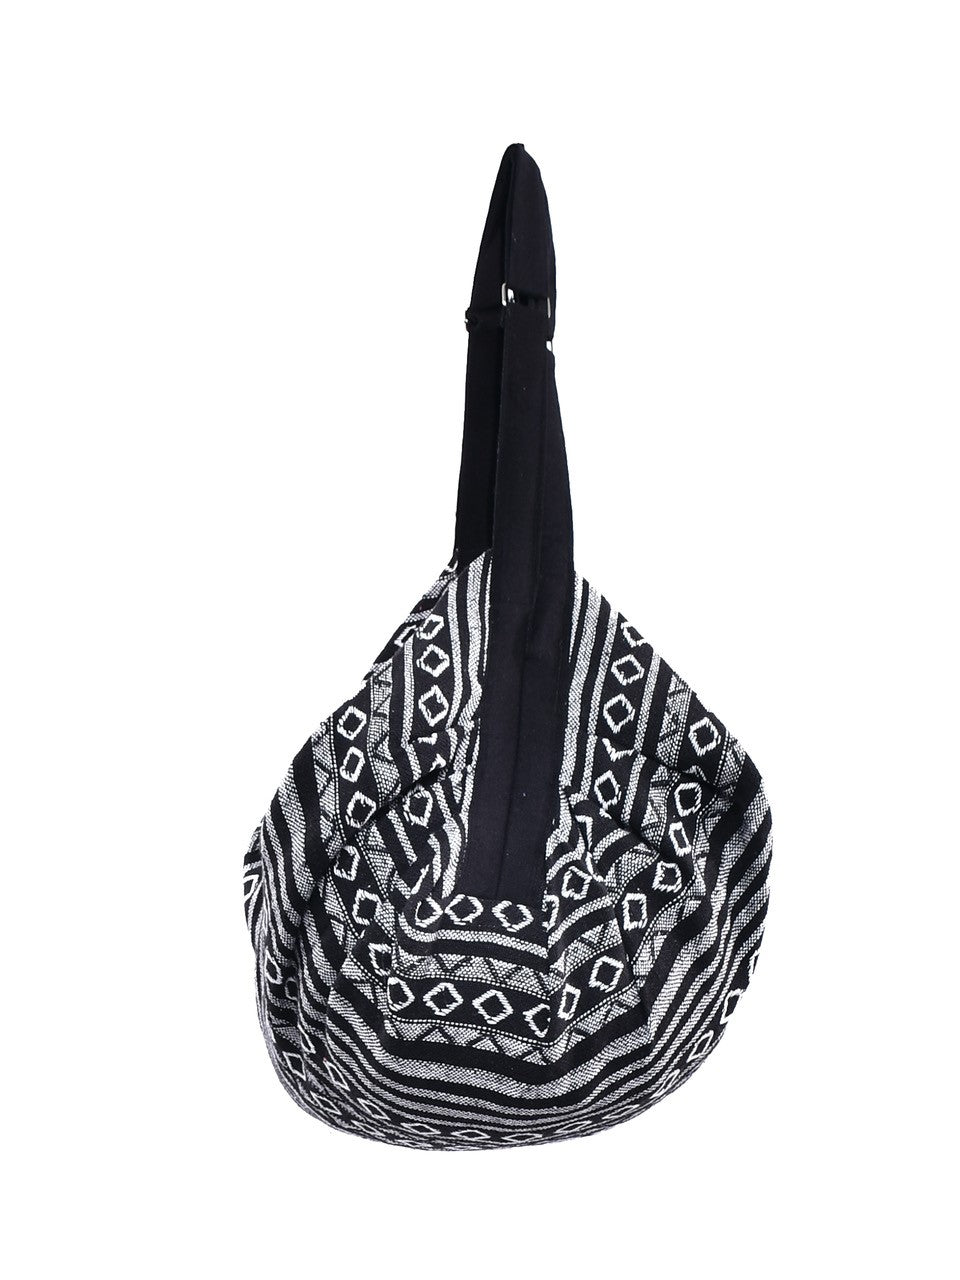 Bohotusk Black Pattern Cotton Canvas Duffle Bag